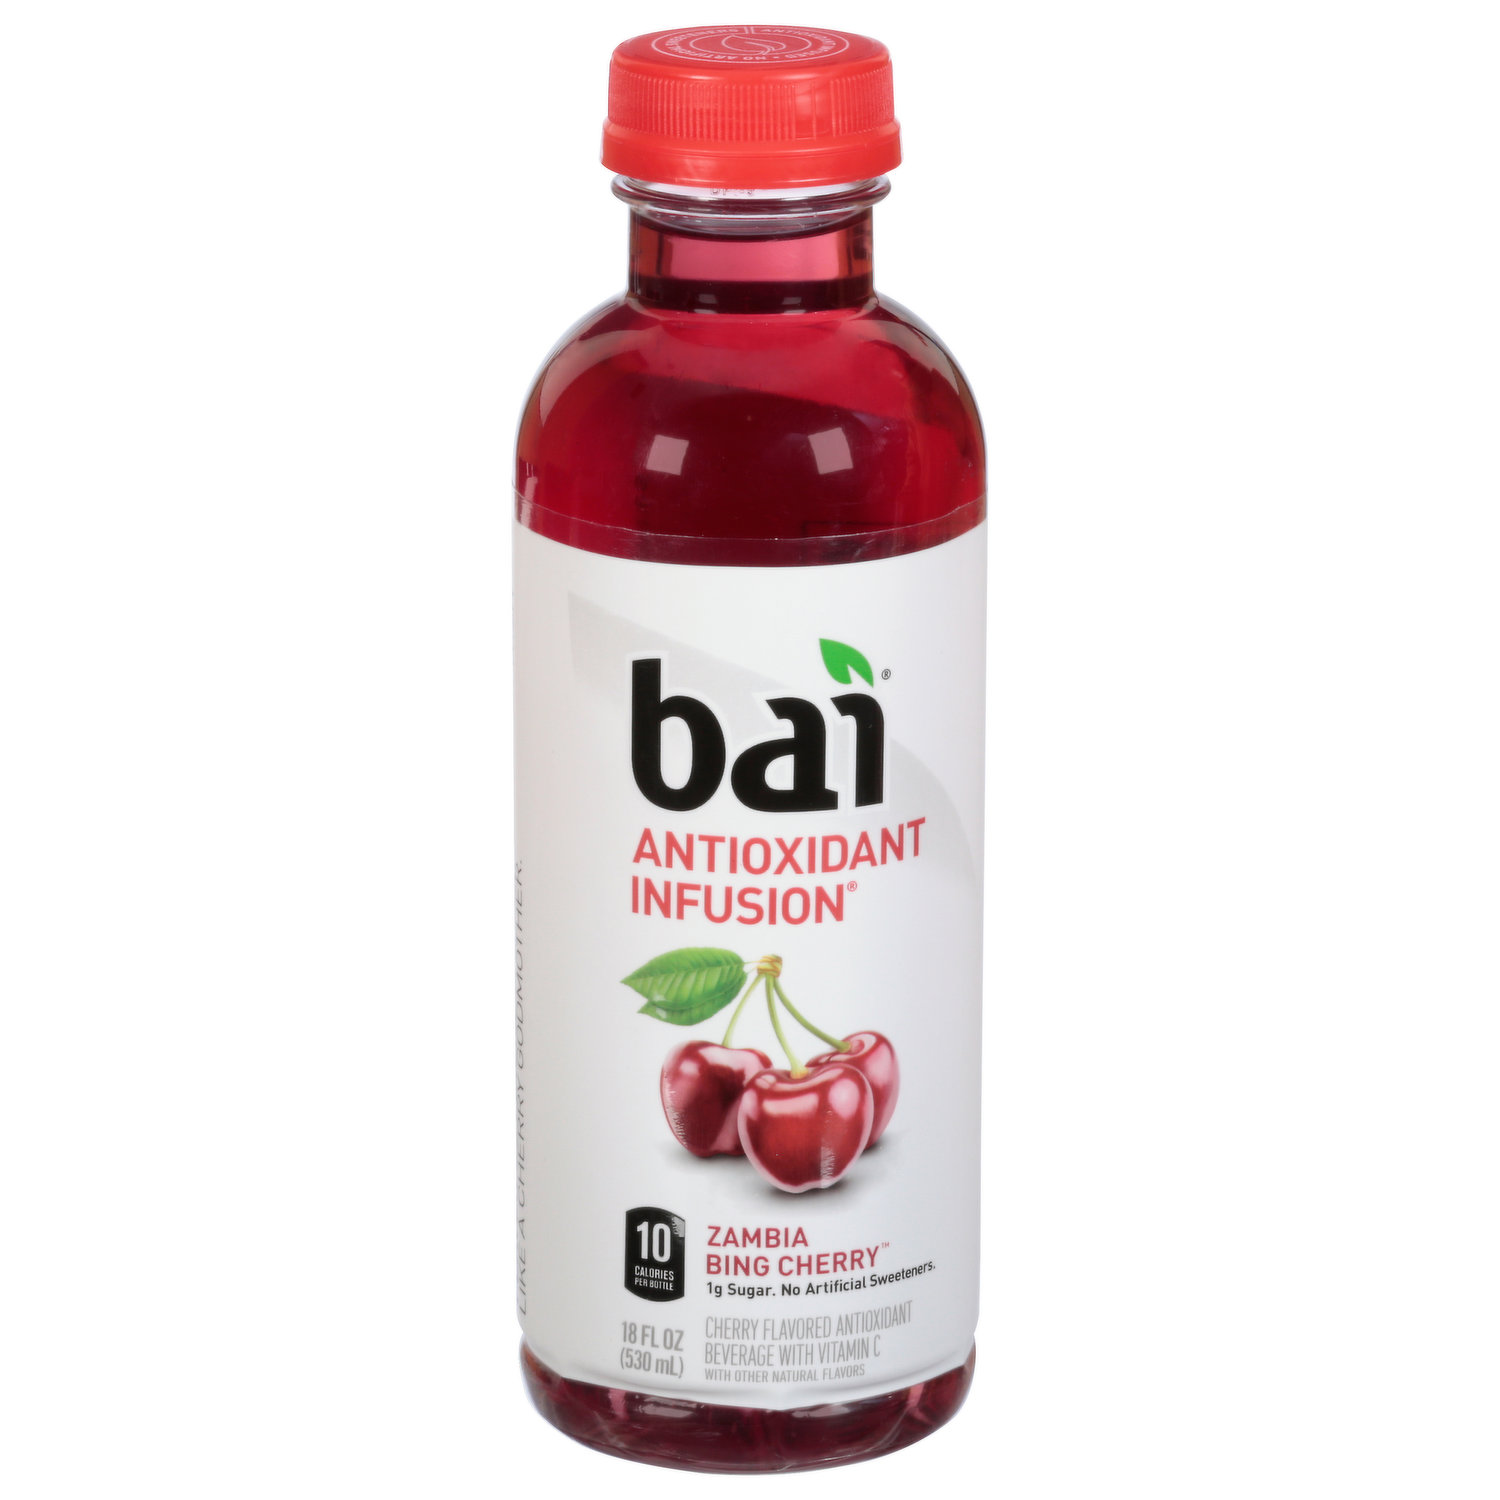 Bai Antioxidant Infusion Kula Watermelon Beverage - Shop Juice at